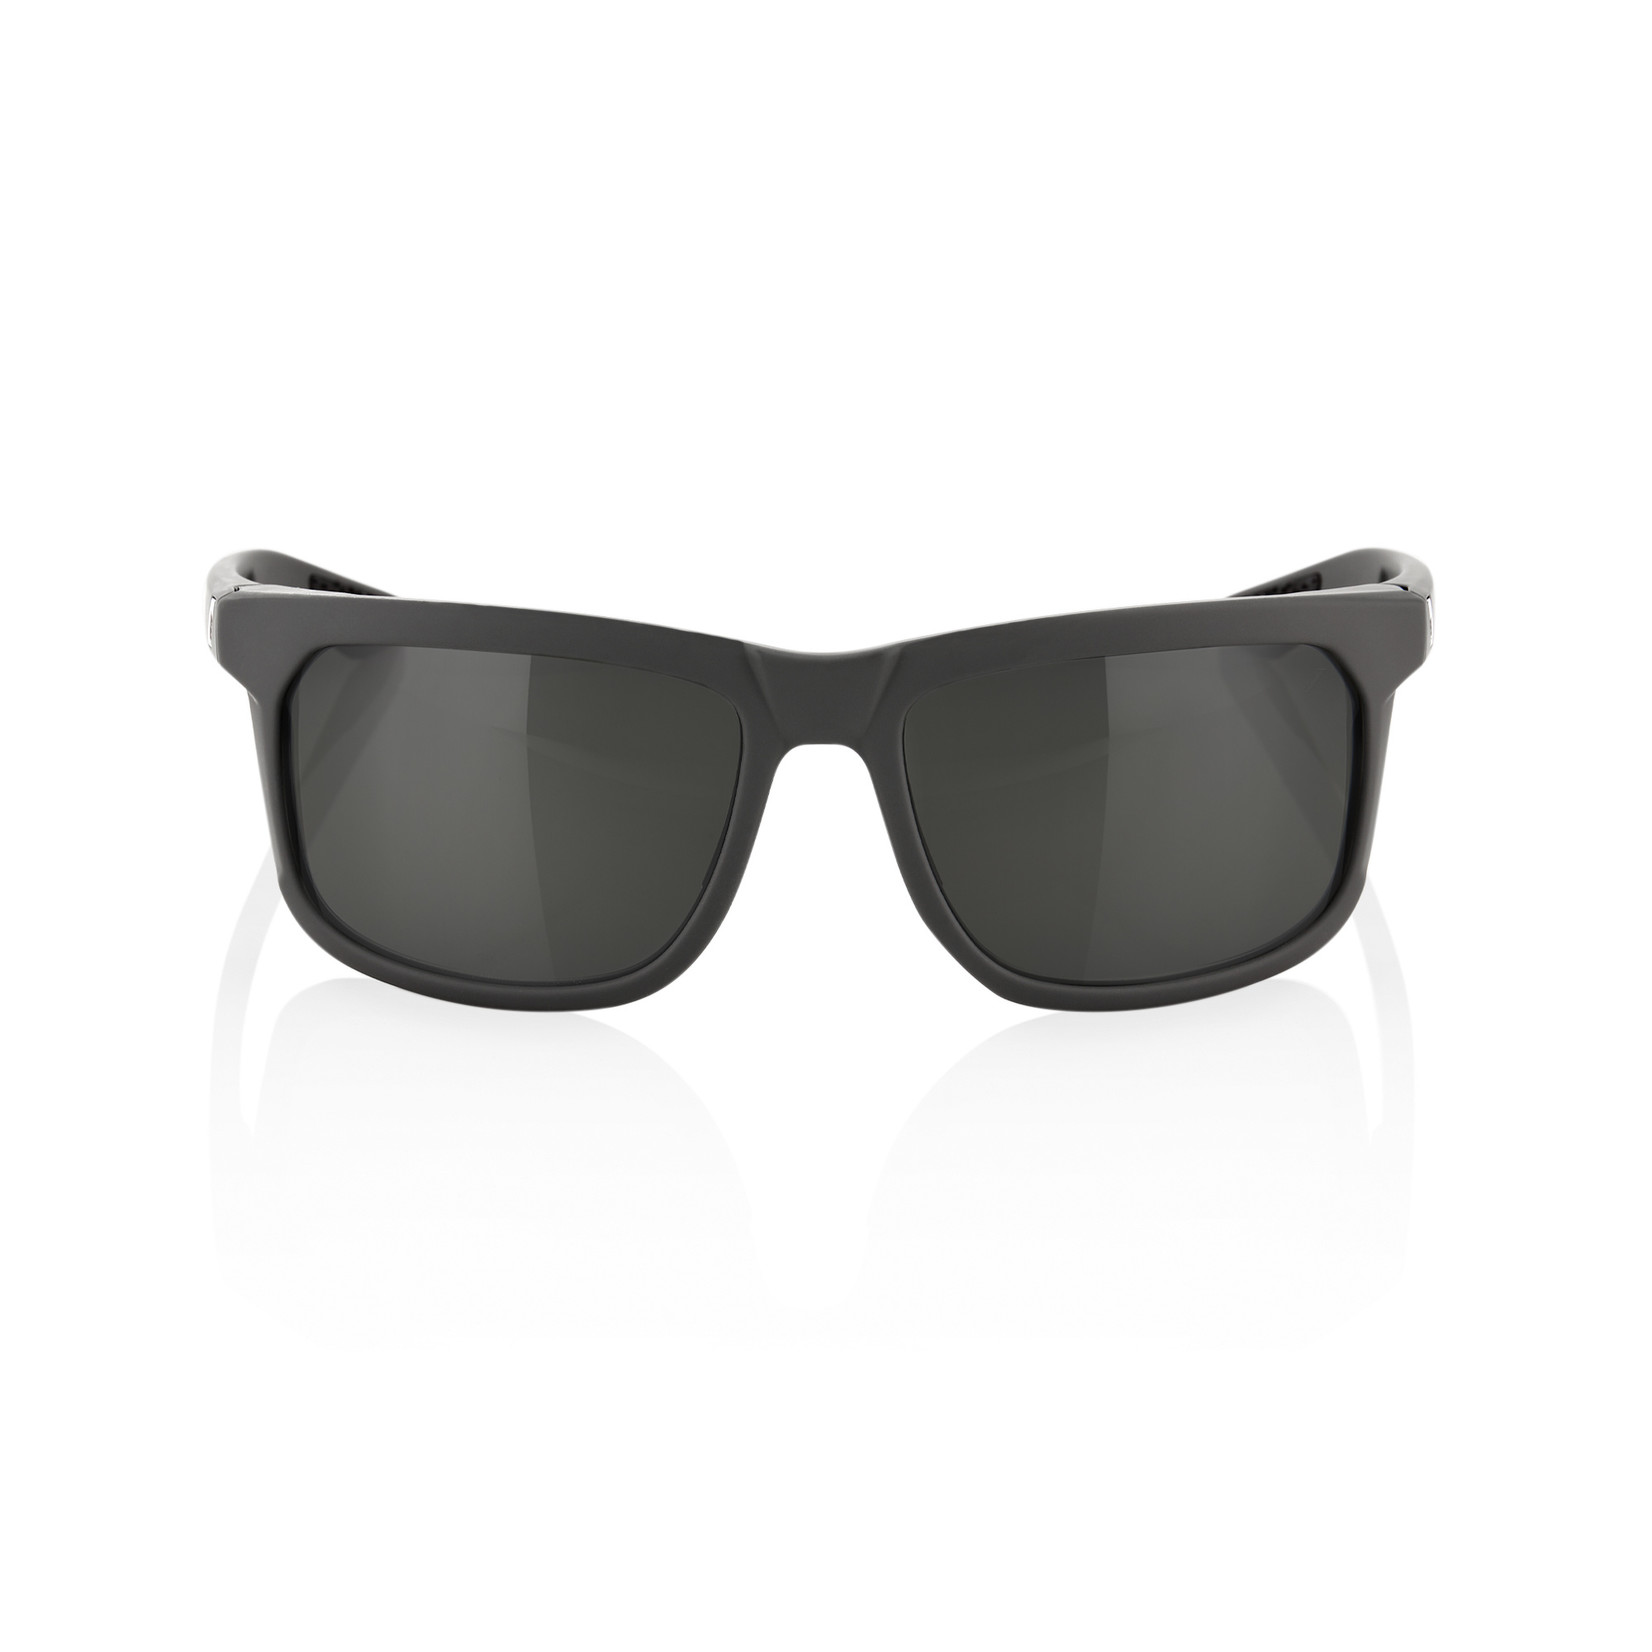 100 Percent 100% Hakan 100% UV Protection Bike Sunglasses Soft Tact Cool Grey - Smoke